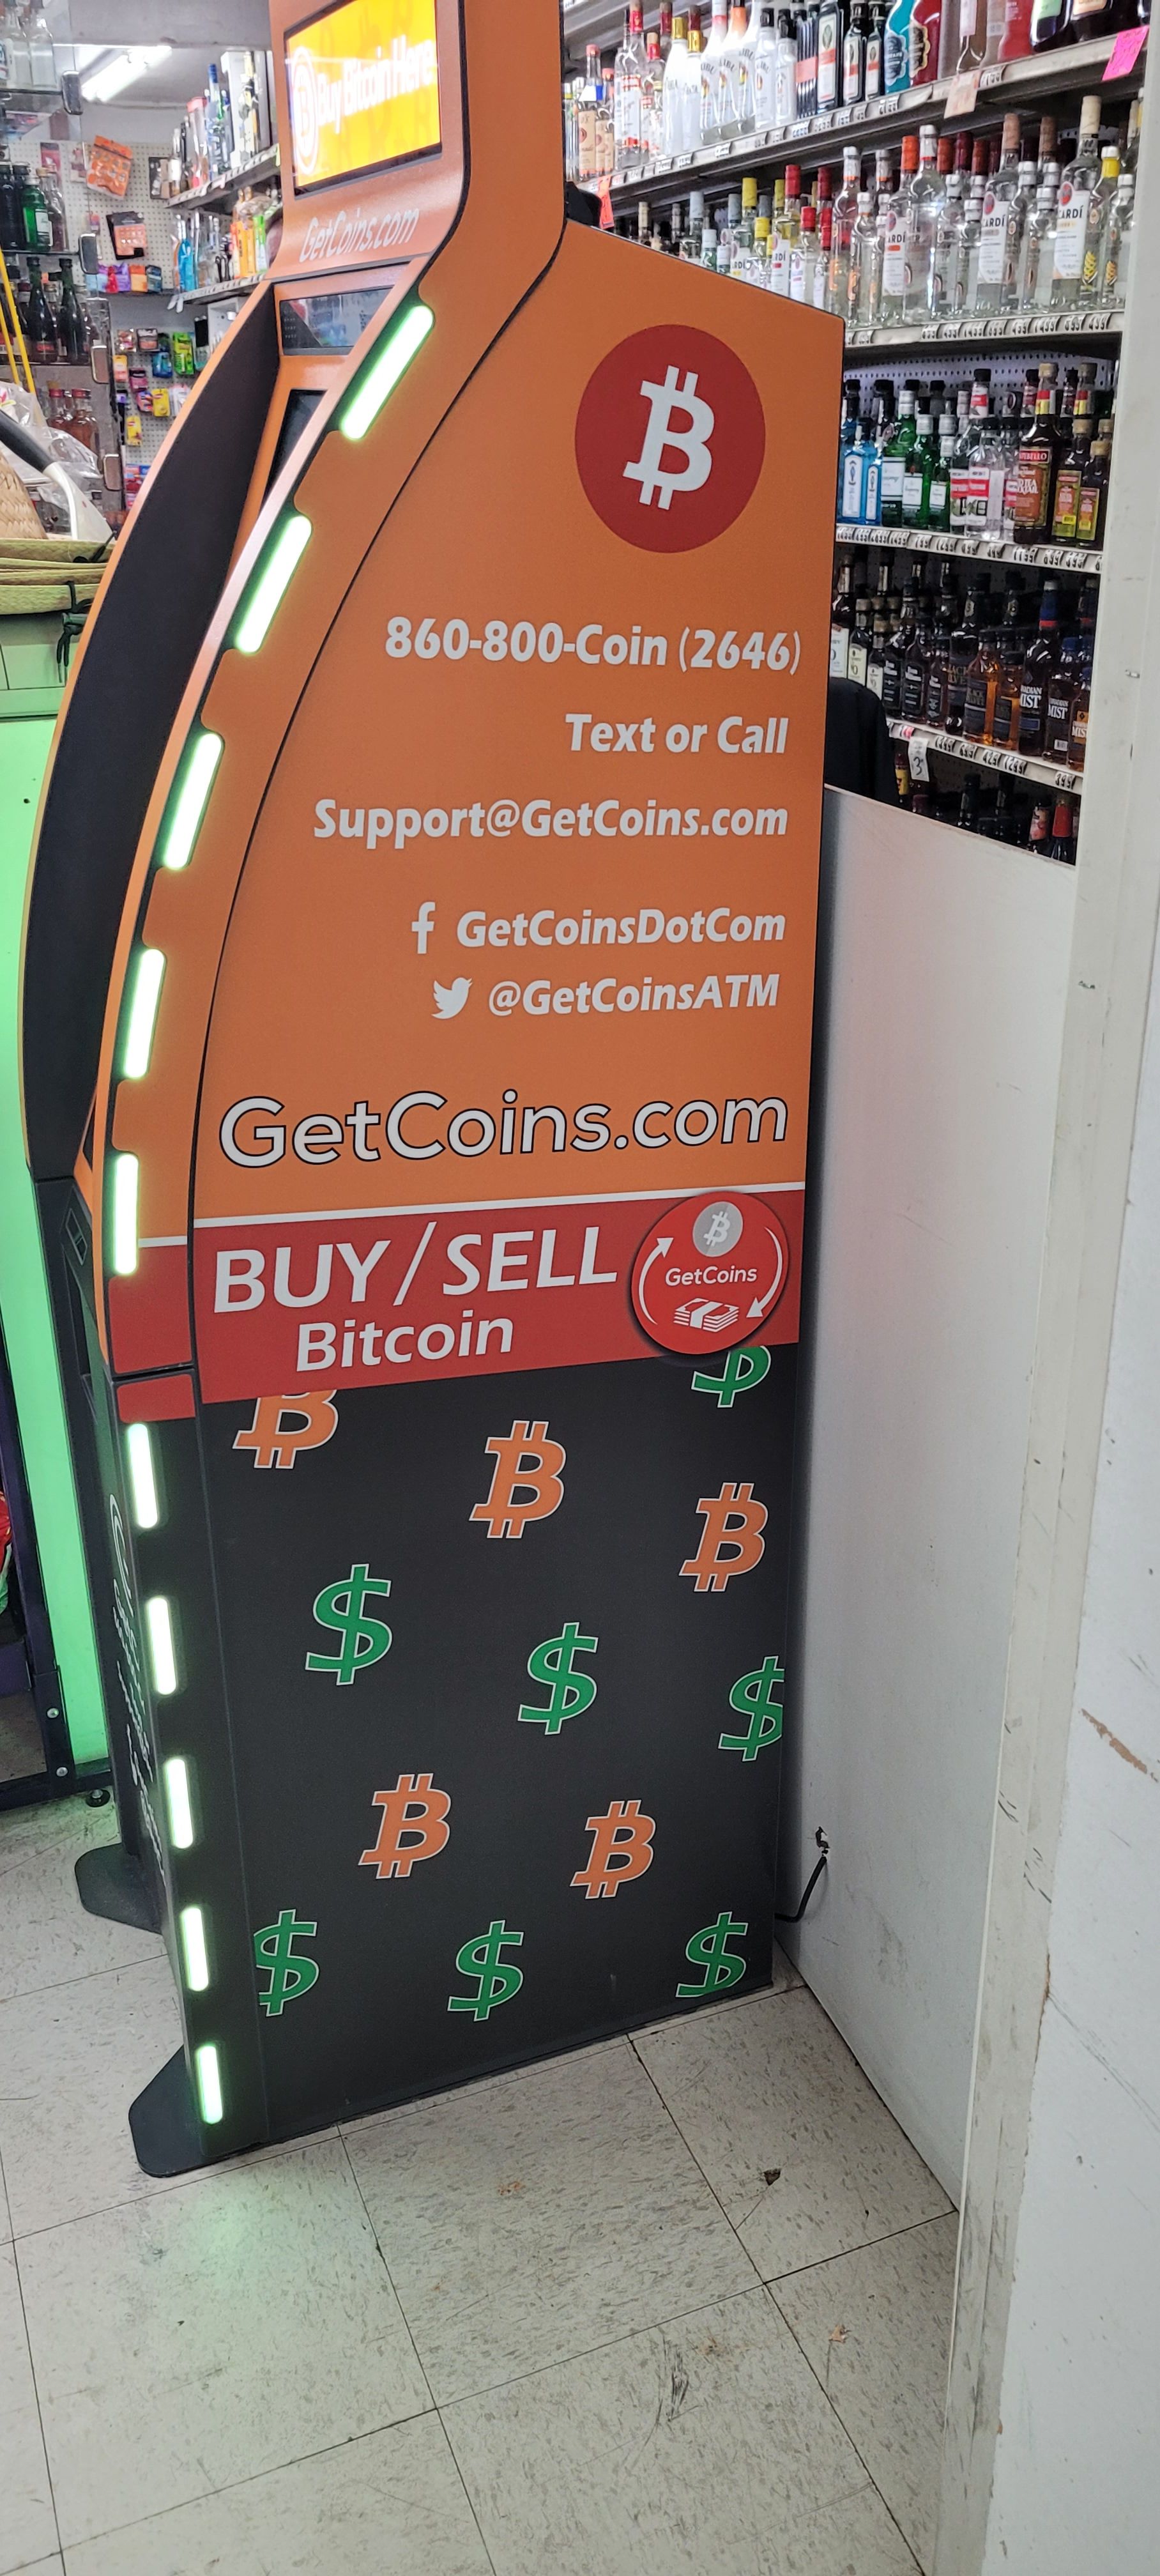 Getcoins - Bitcoin ATM - Inside of Golden Gate Market in San Diego, California